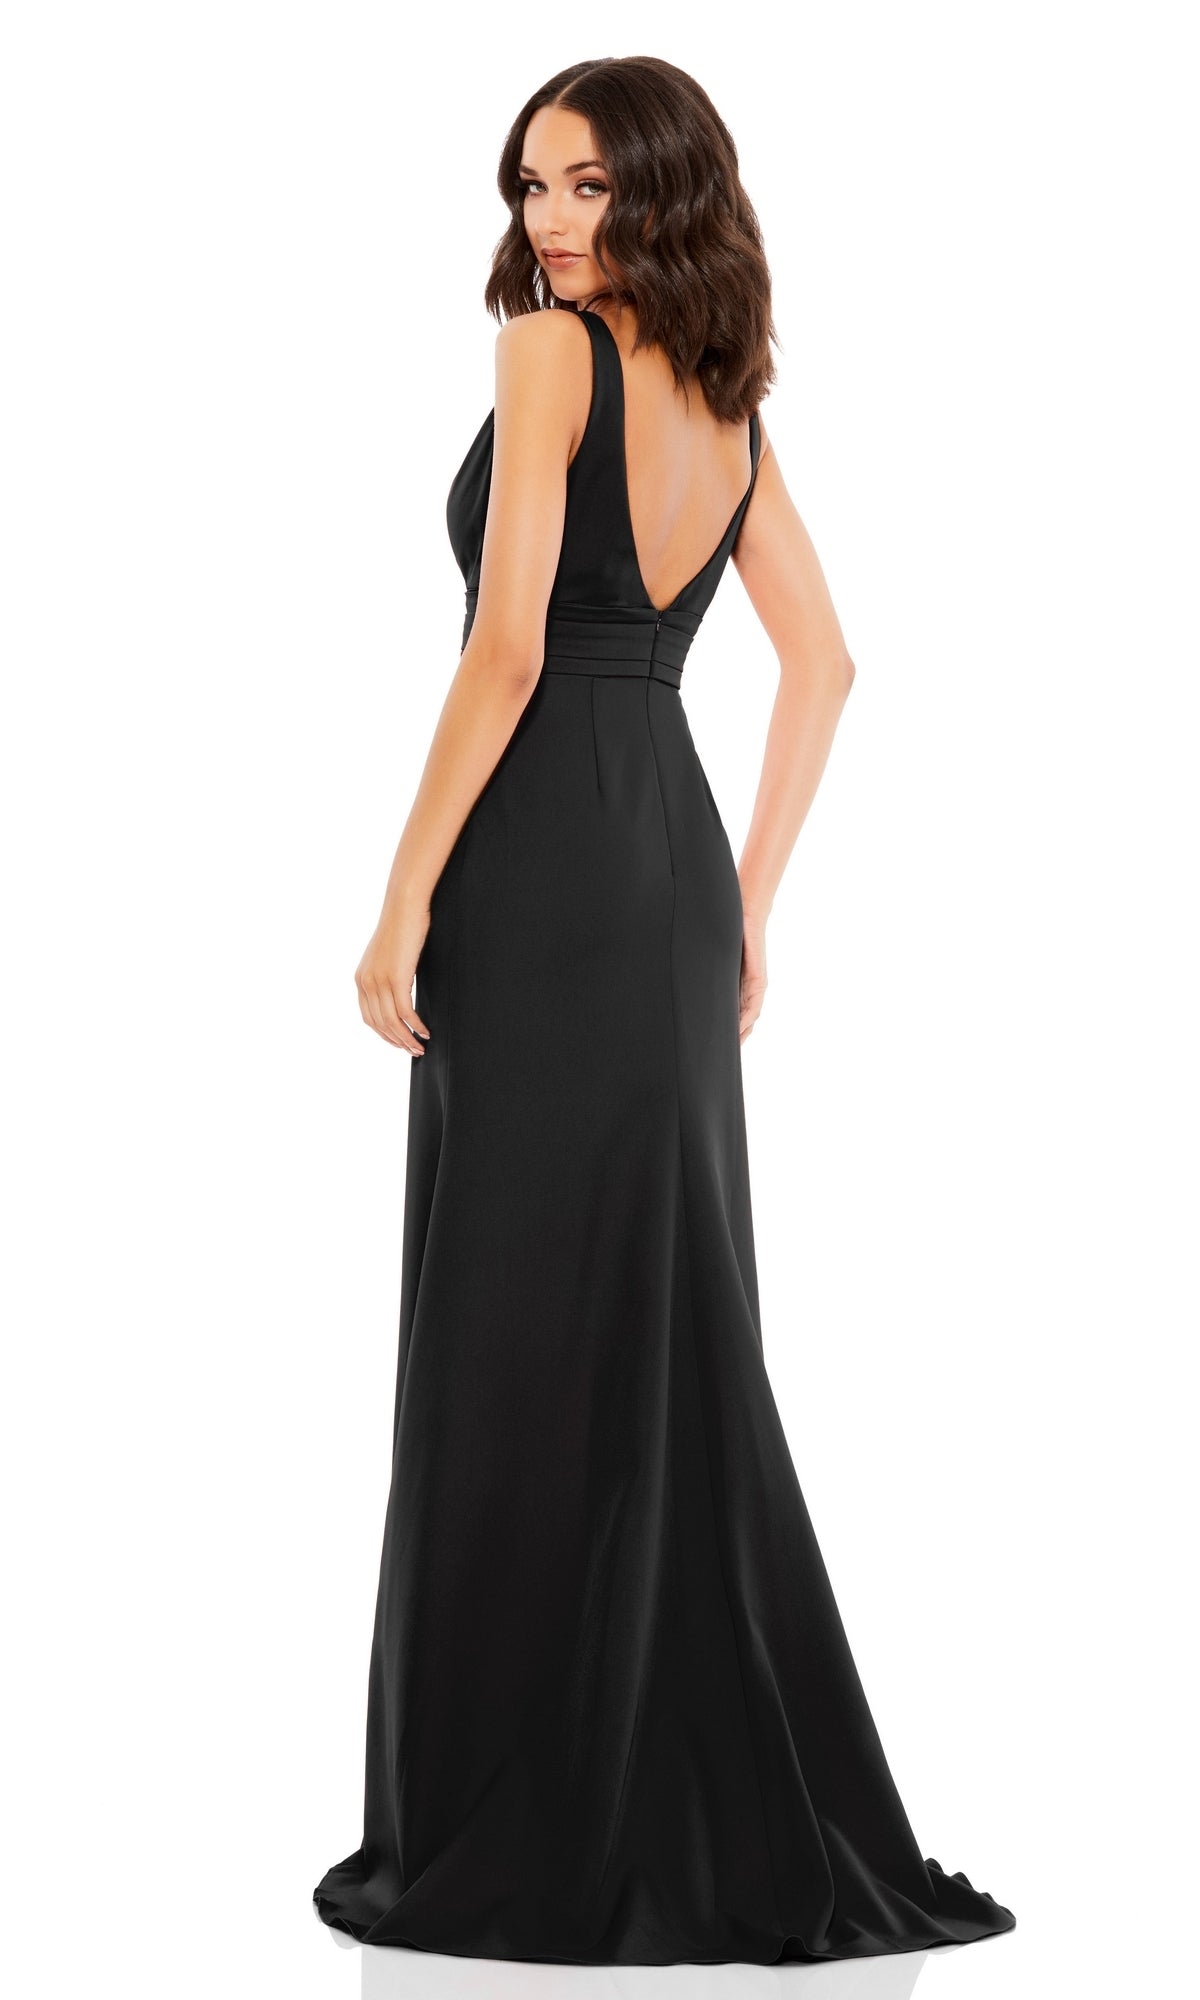 Long Formal Dress 49454 by Mac Duggal